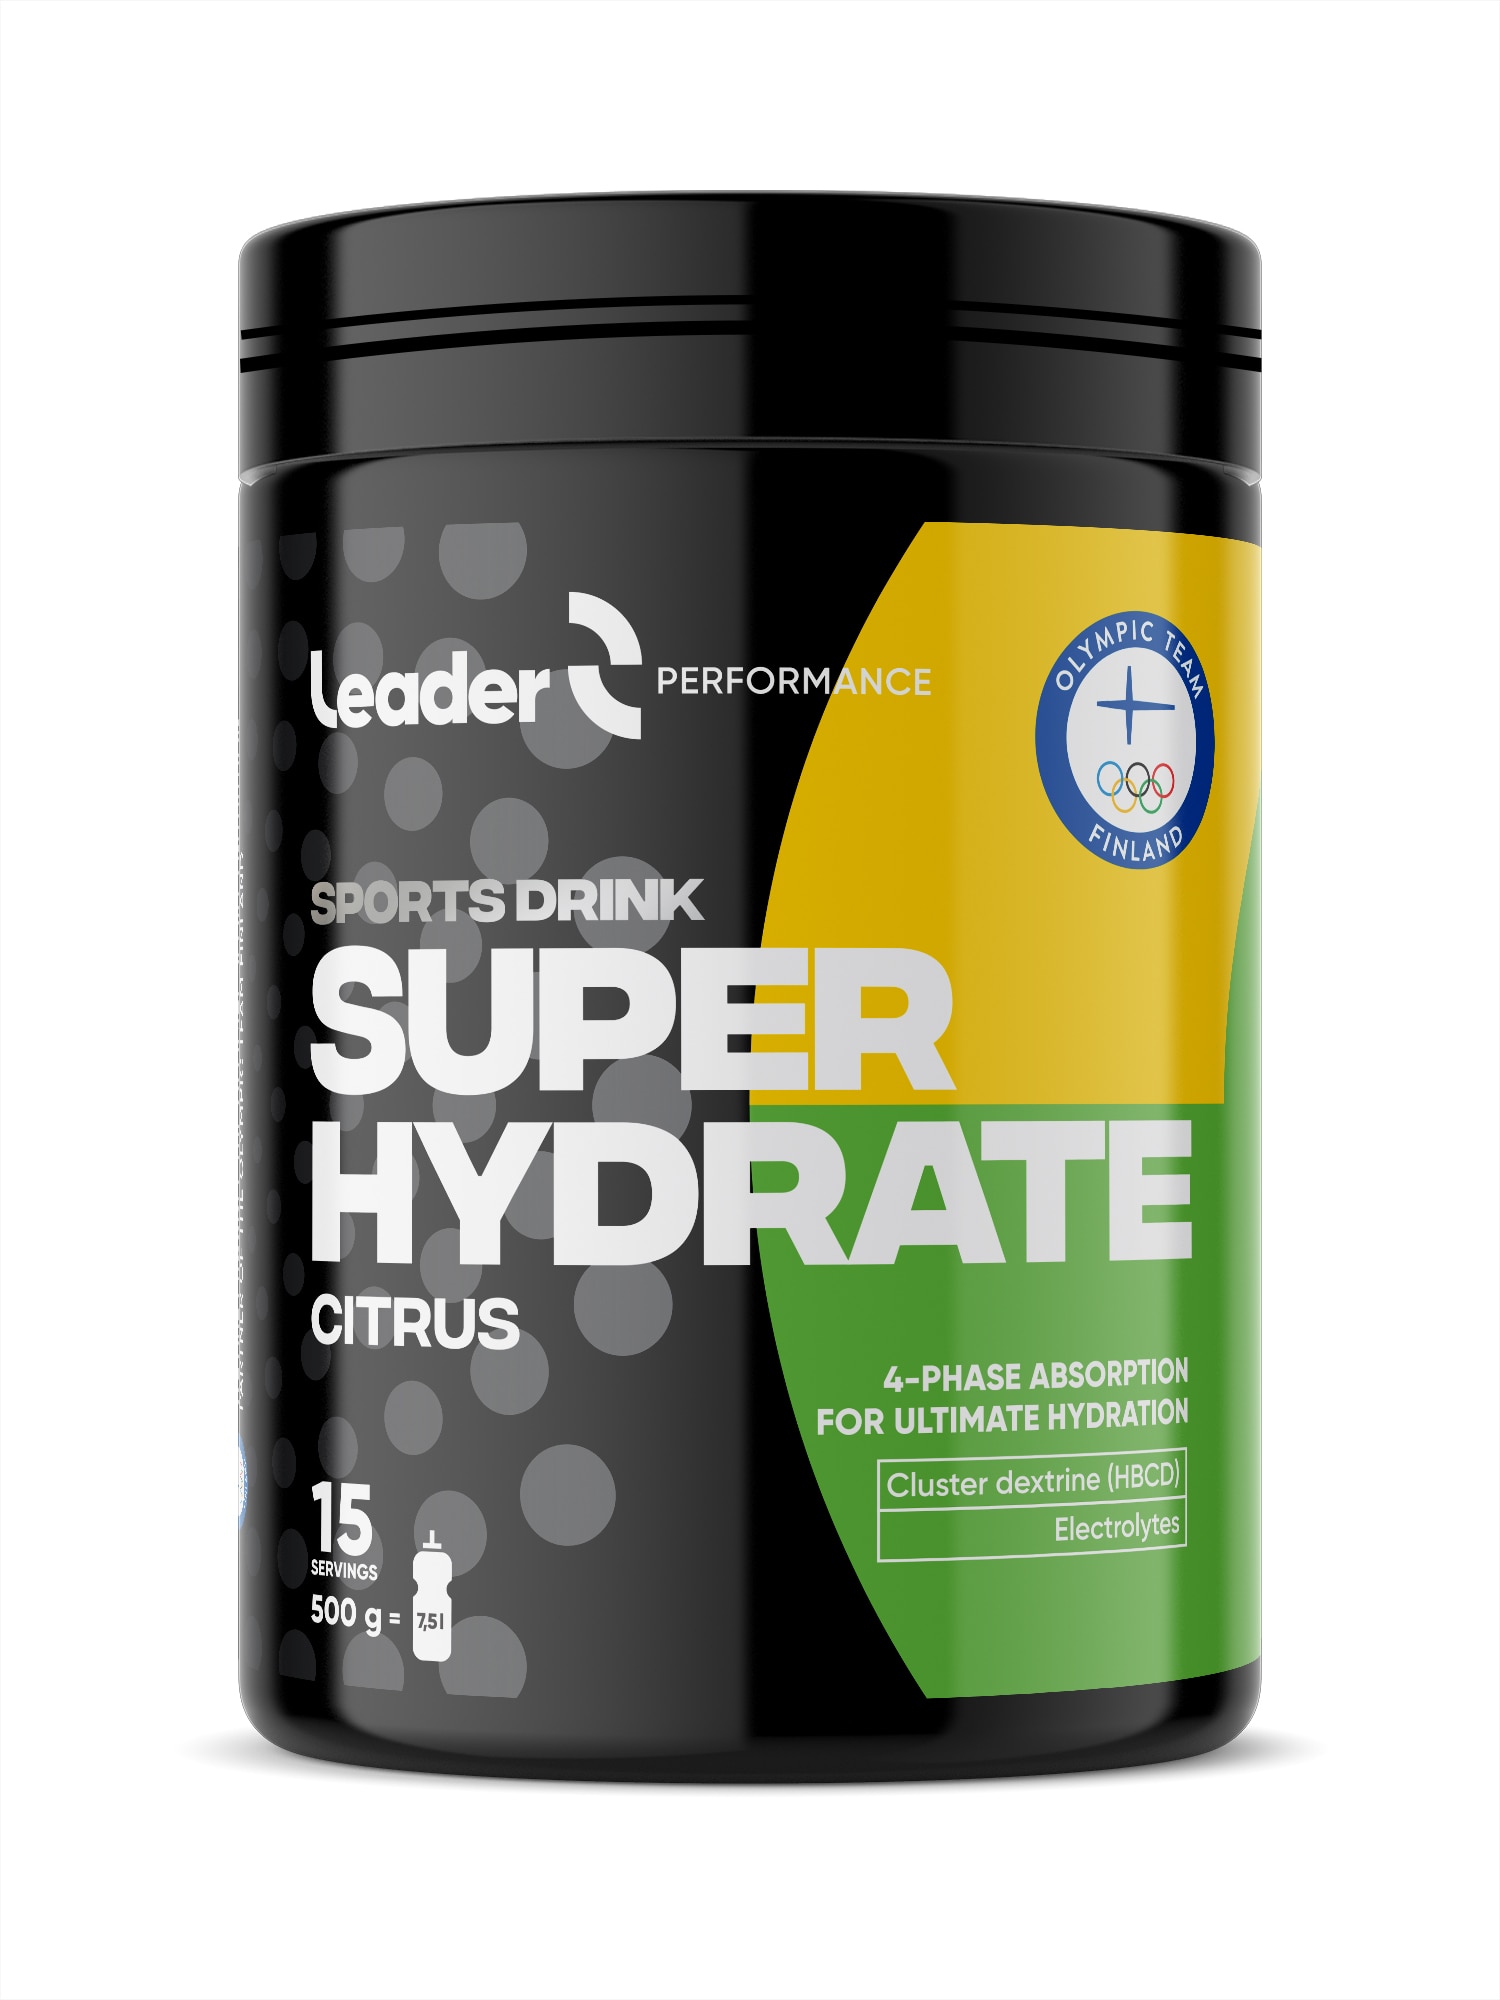 Leader Super Hydrate Sports Drink Citrus